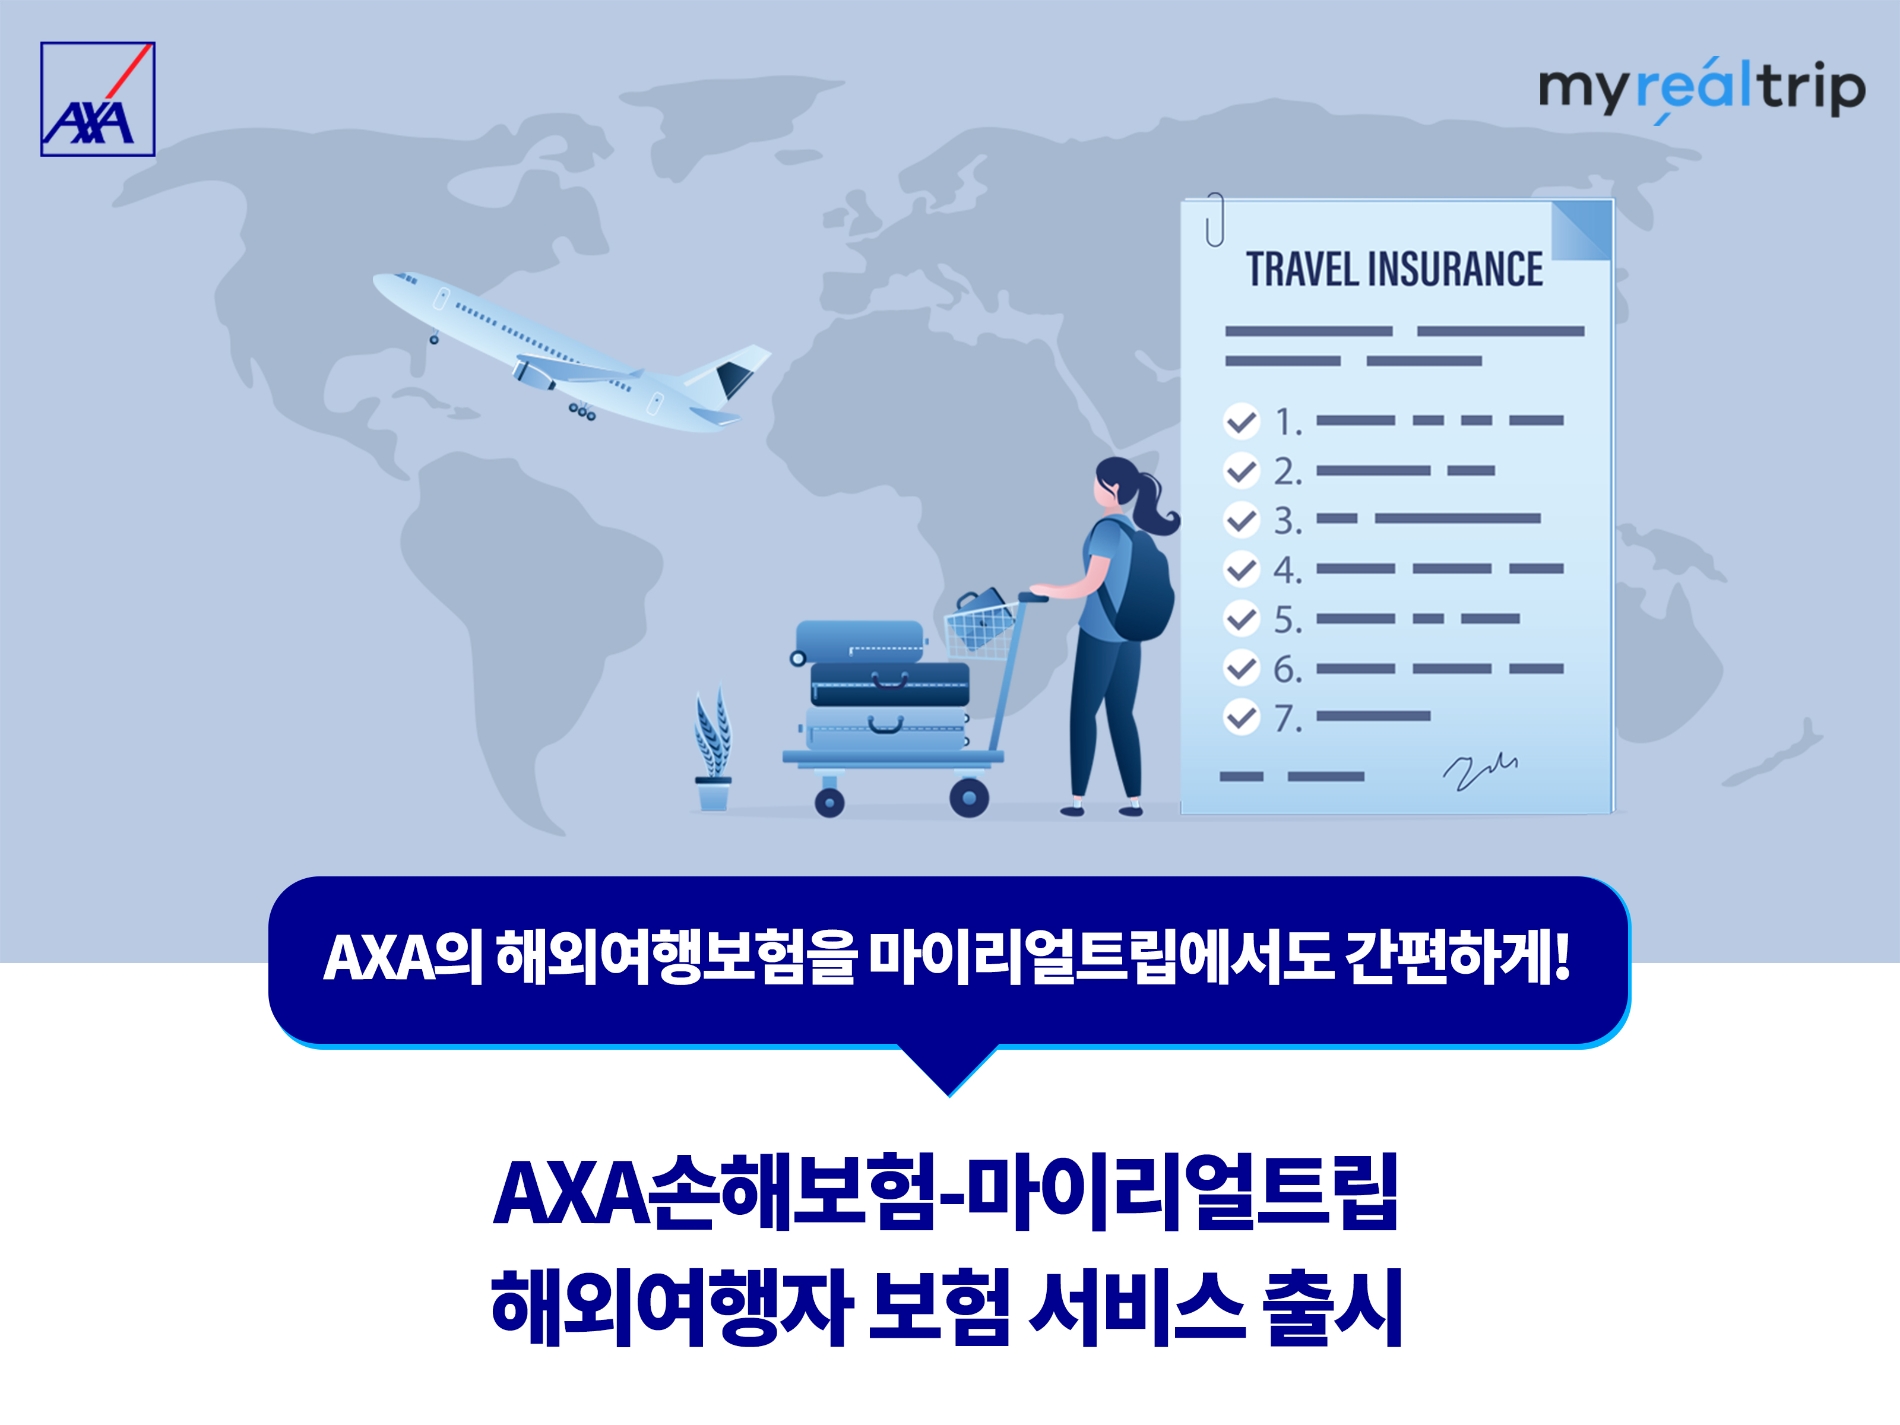 AXA(악사)손보가 마이리얼트립과 ‘다이렉트 해외여행보험’ 판매를 시작한다. 사진 제공=AXA손보